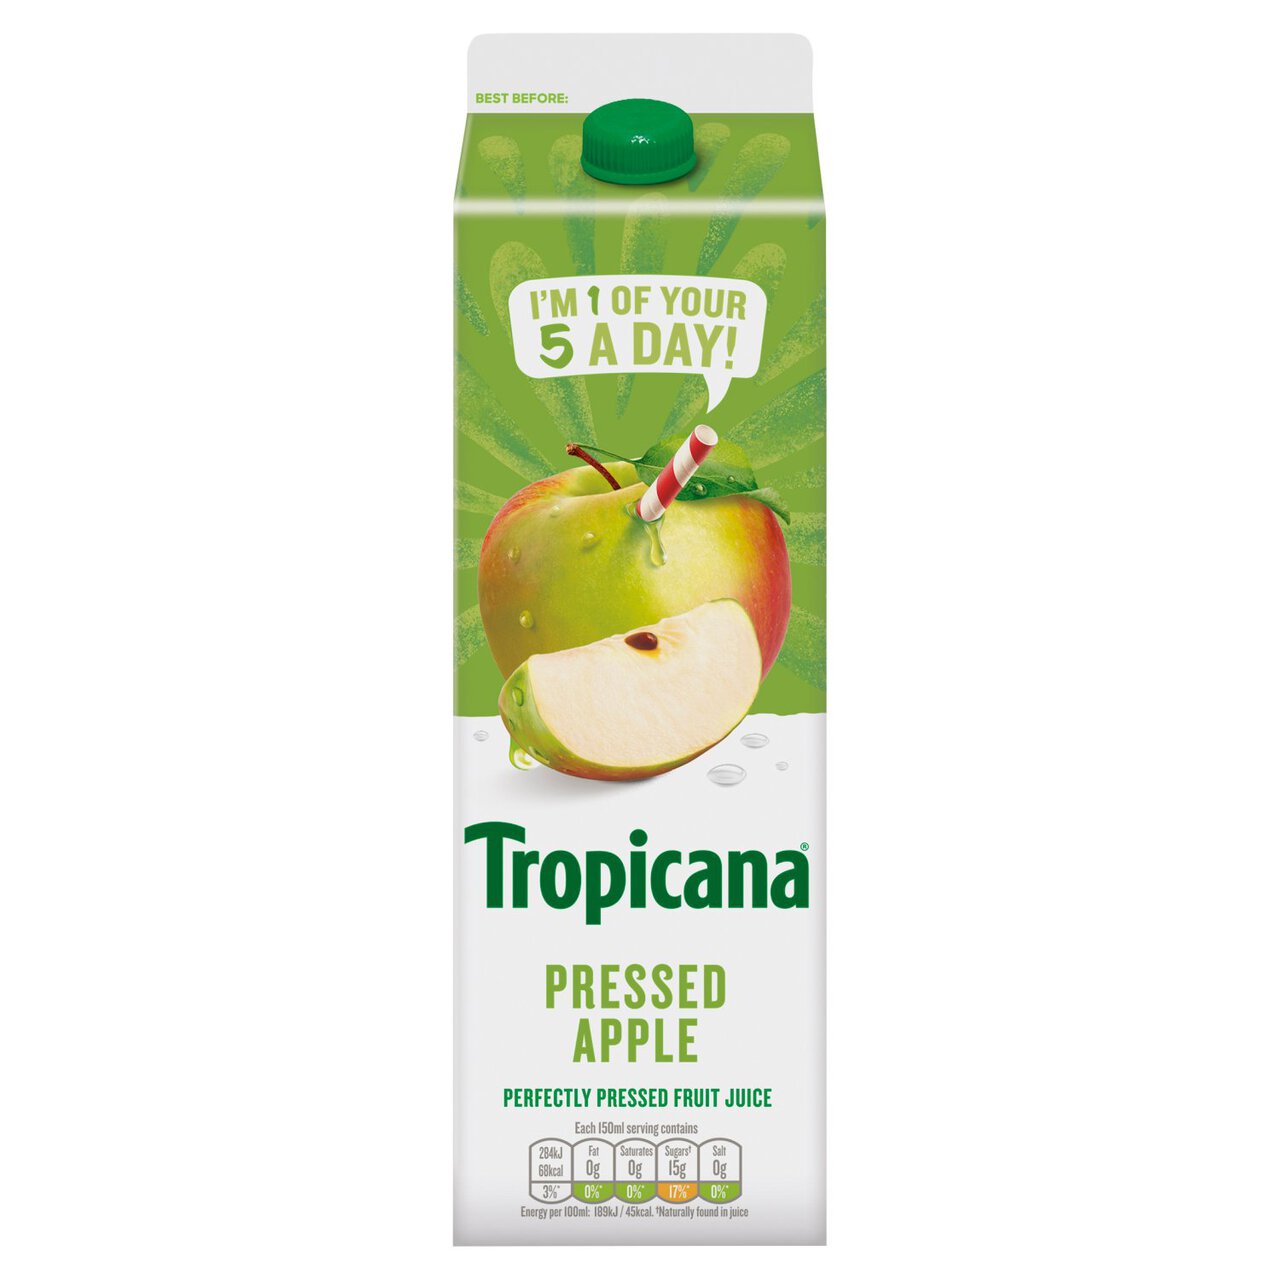 Tropicana Pressed Apple Juice 900ml